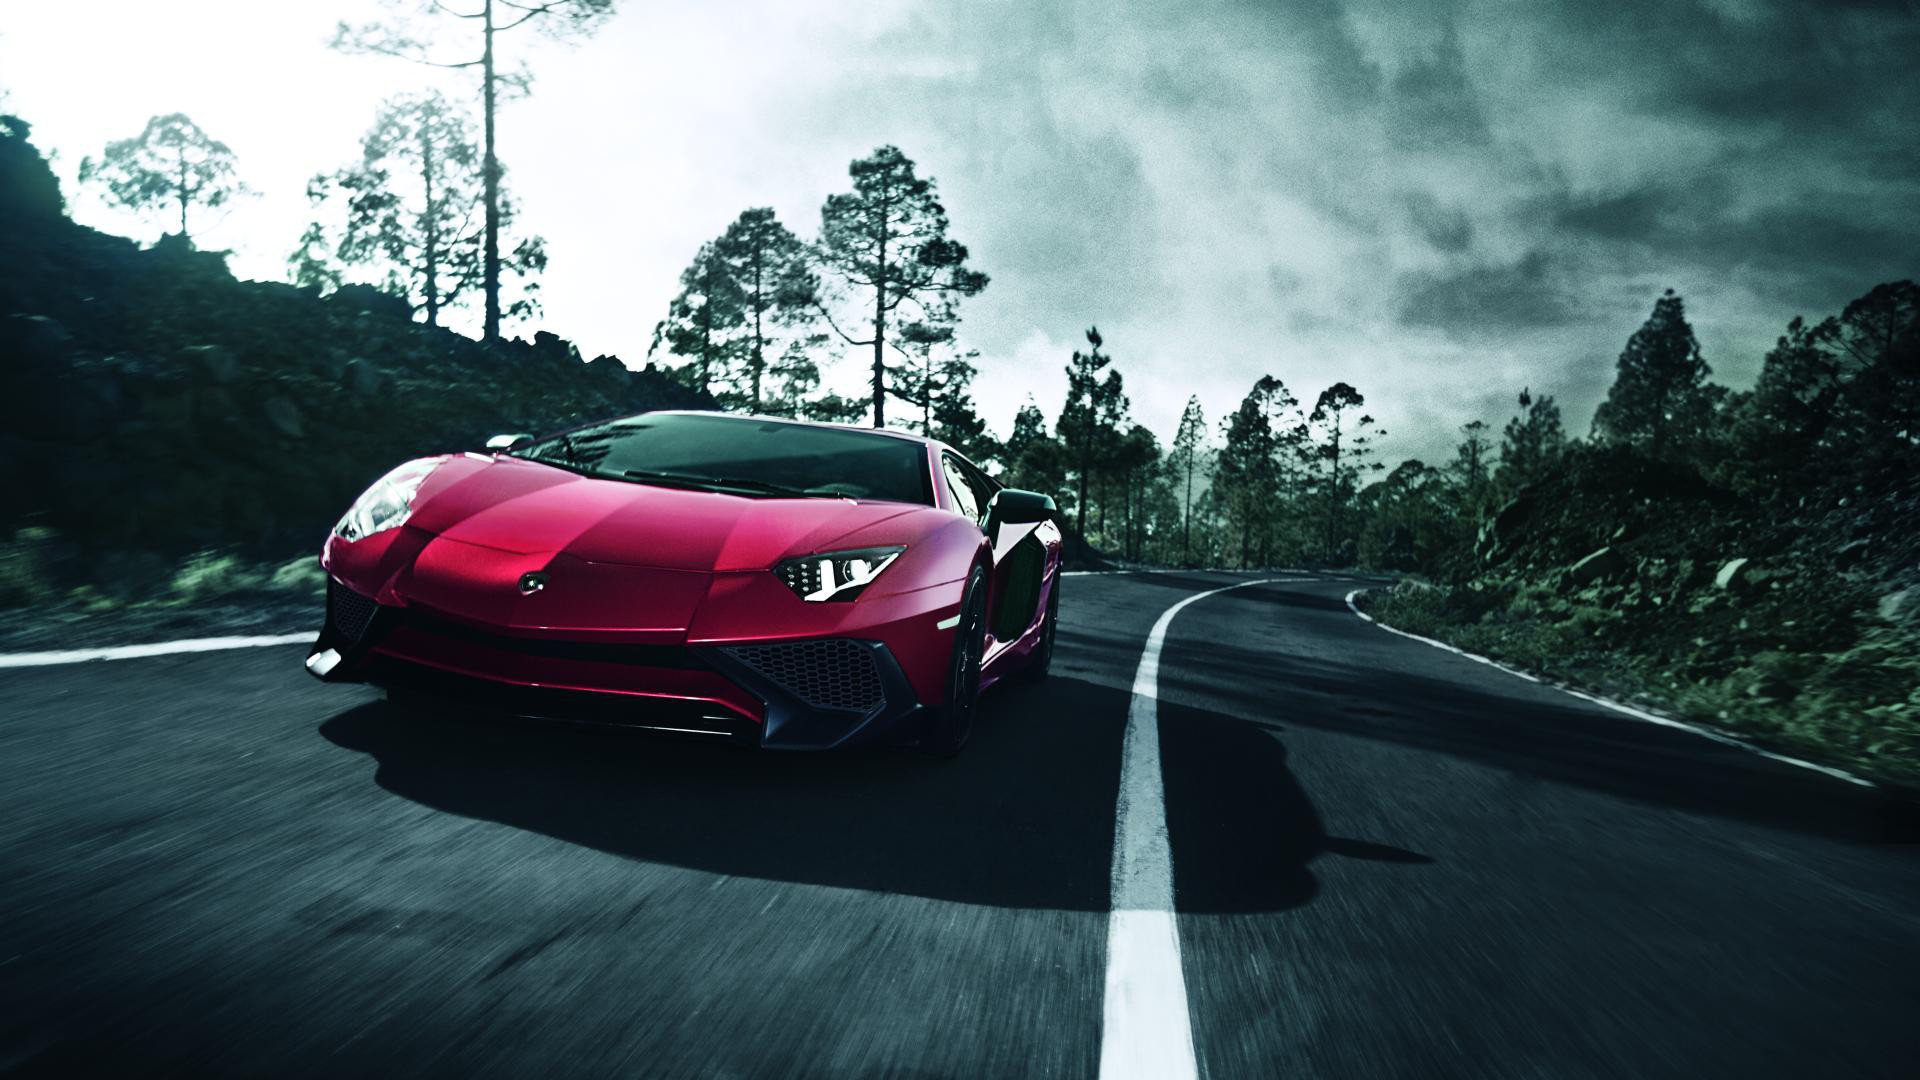 Free download Lamborghini Aventador background ID:323963 full hd 1920x1080 for computer